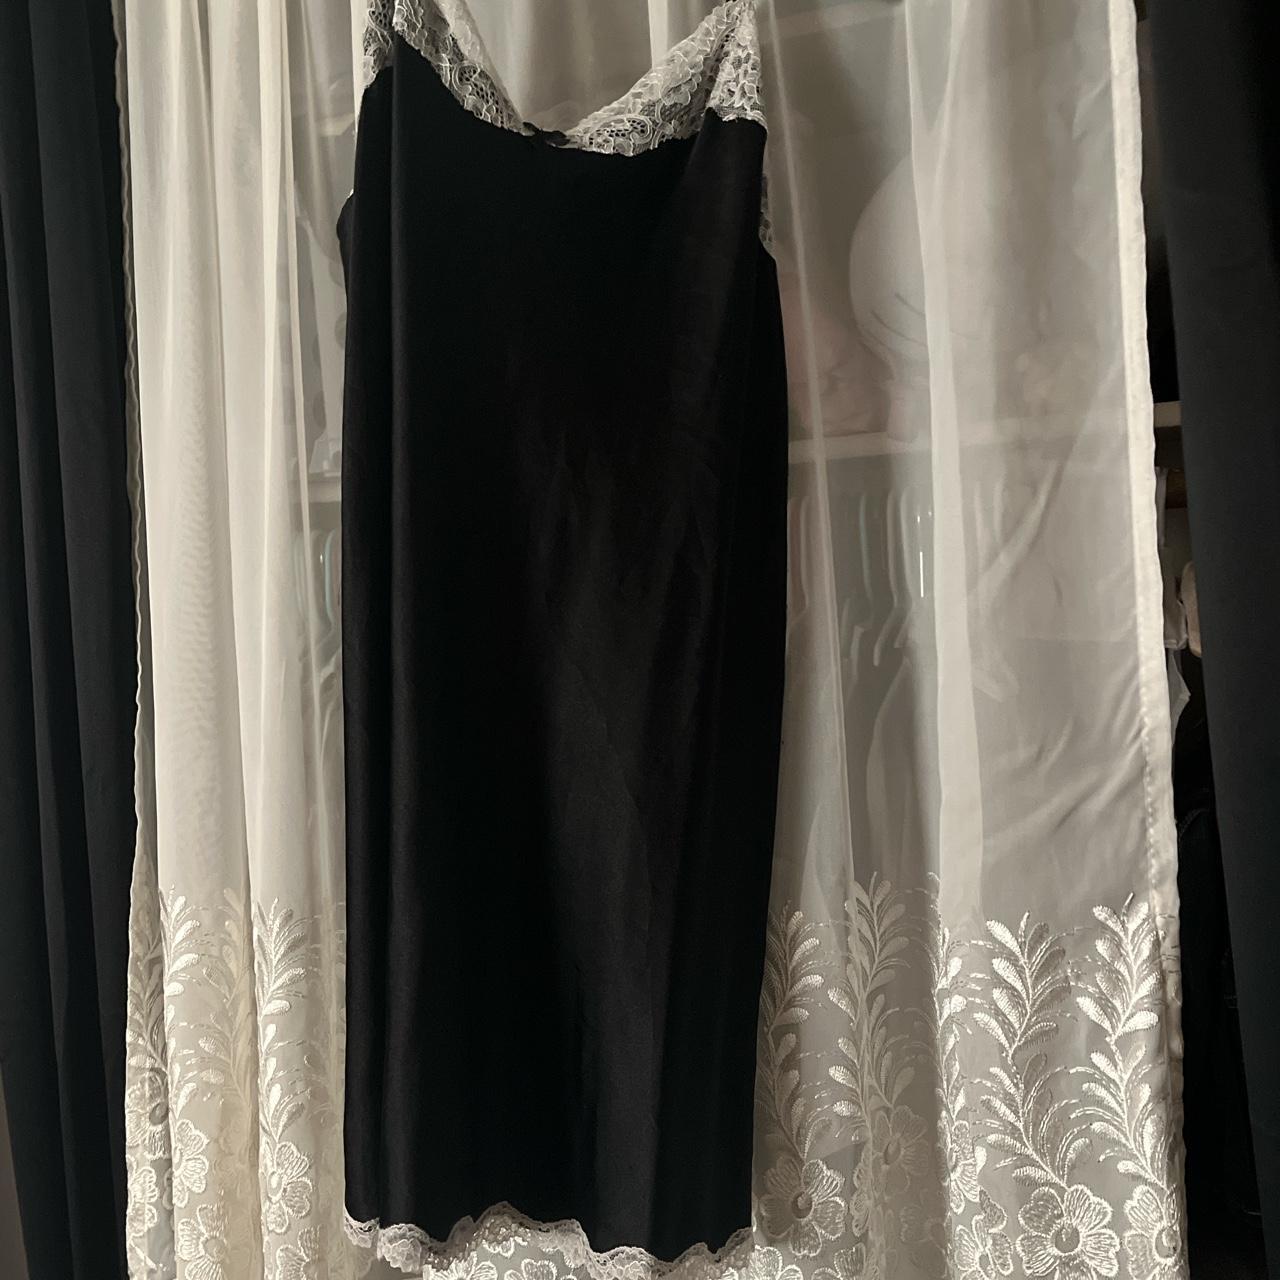 Victorias secret black and white lace slip dress in... - Depop